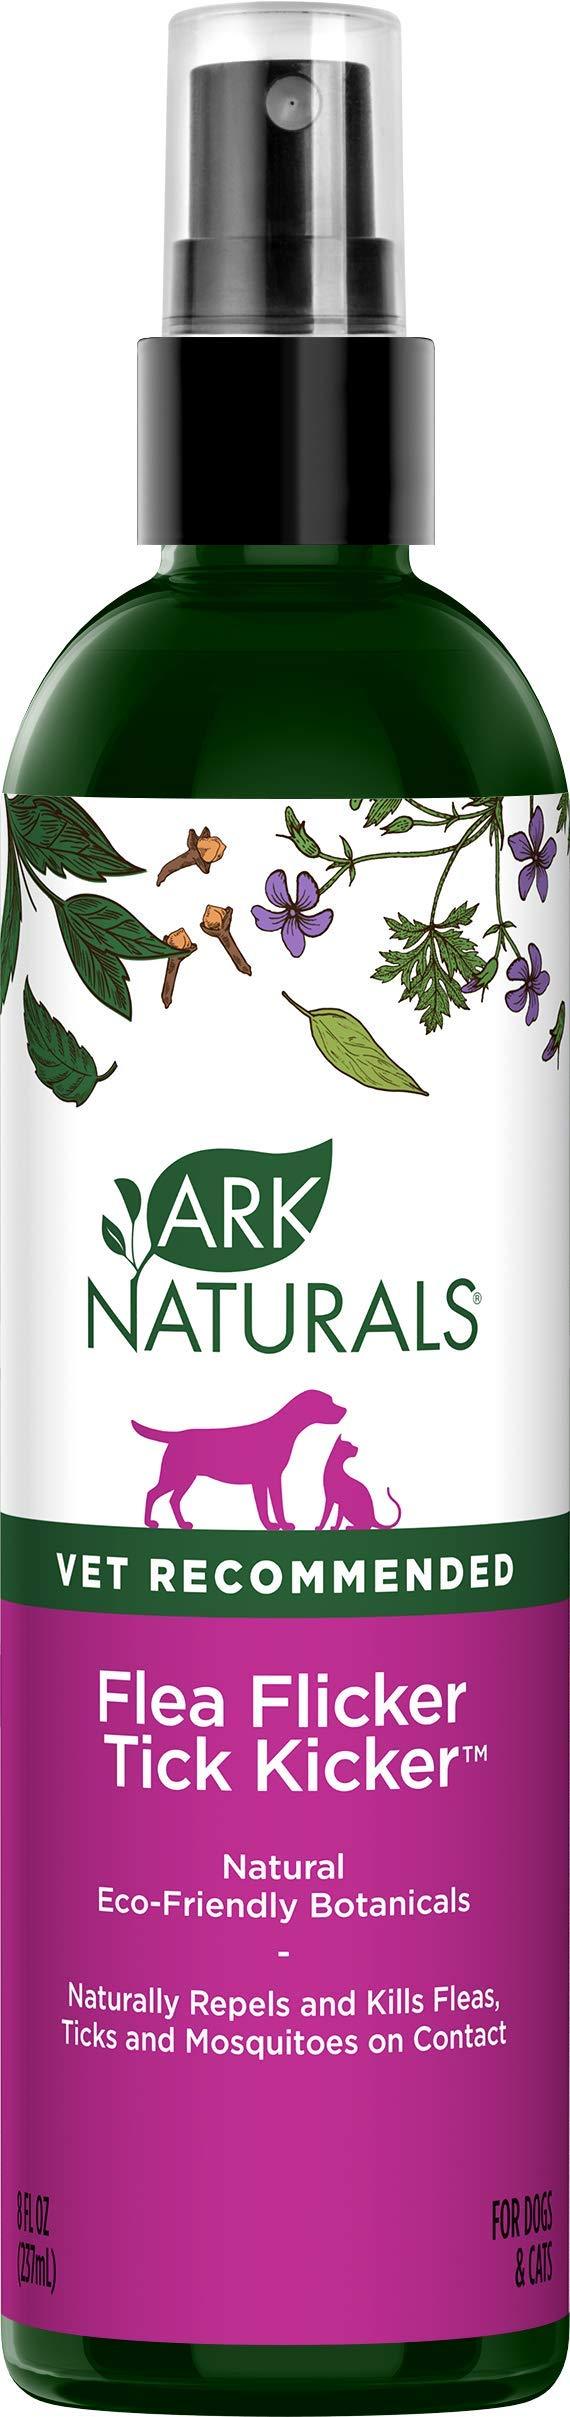 Ark Naturals Flea Flicker Tick Kicker Flea and Tick Repellent, for Cats and Dogs, Repels and Kills Fleas, Ticks, and Mosquitoes, Natural Botanical Formula, 8 oz. Bottle - PawsPlanet Australia